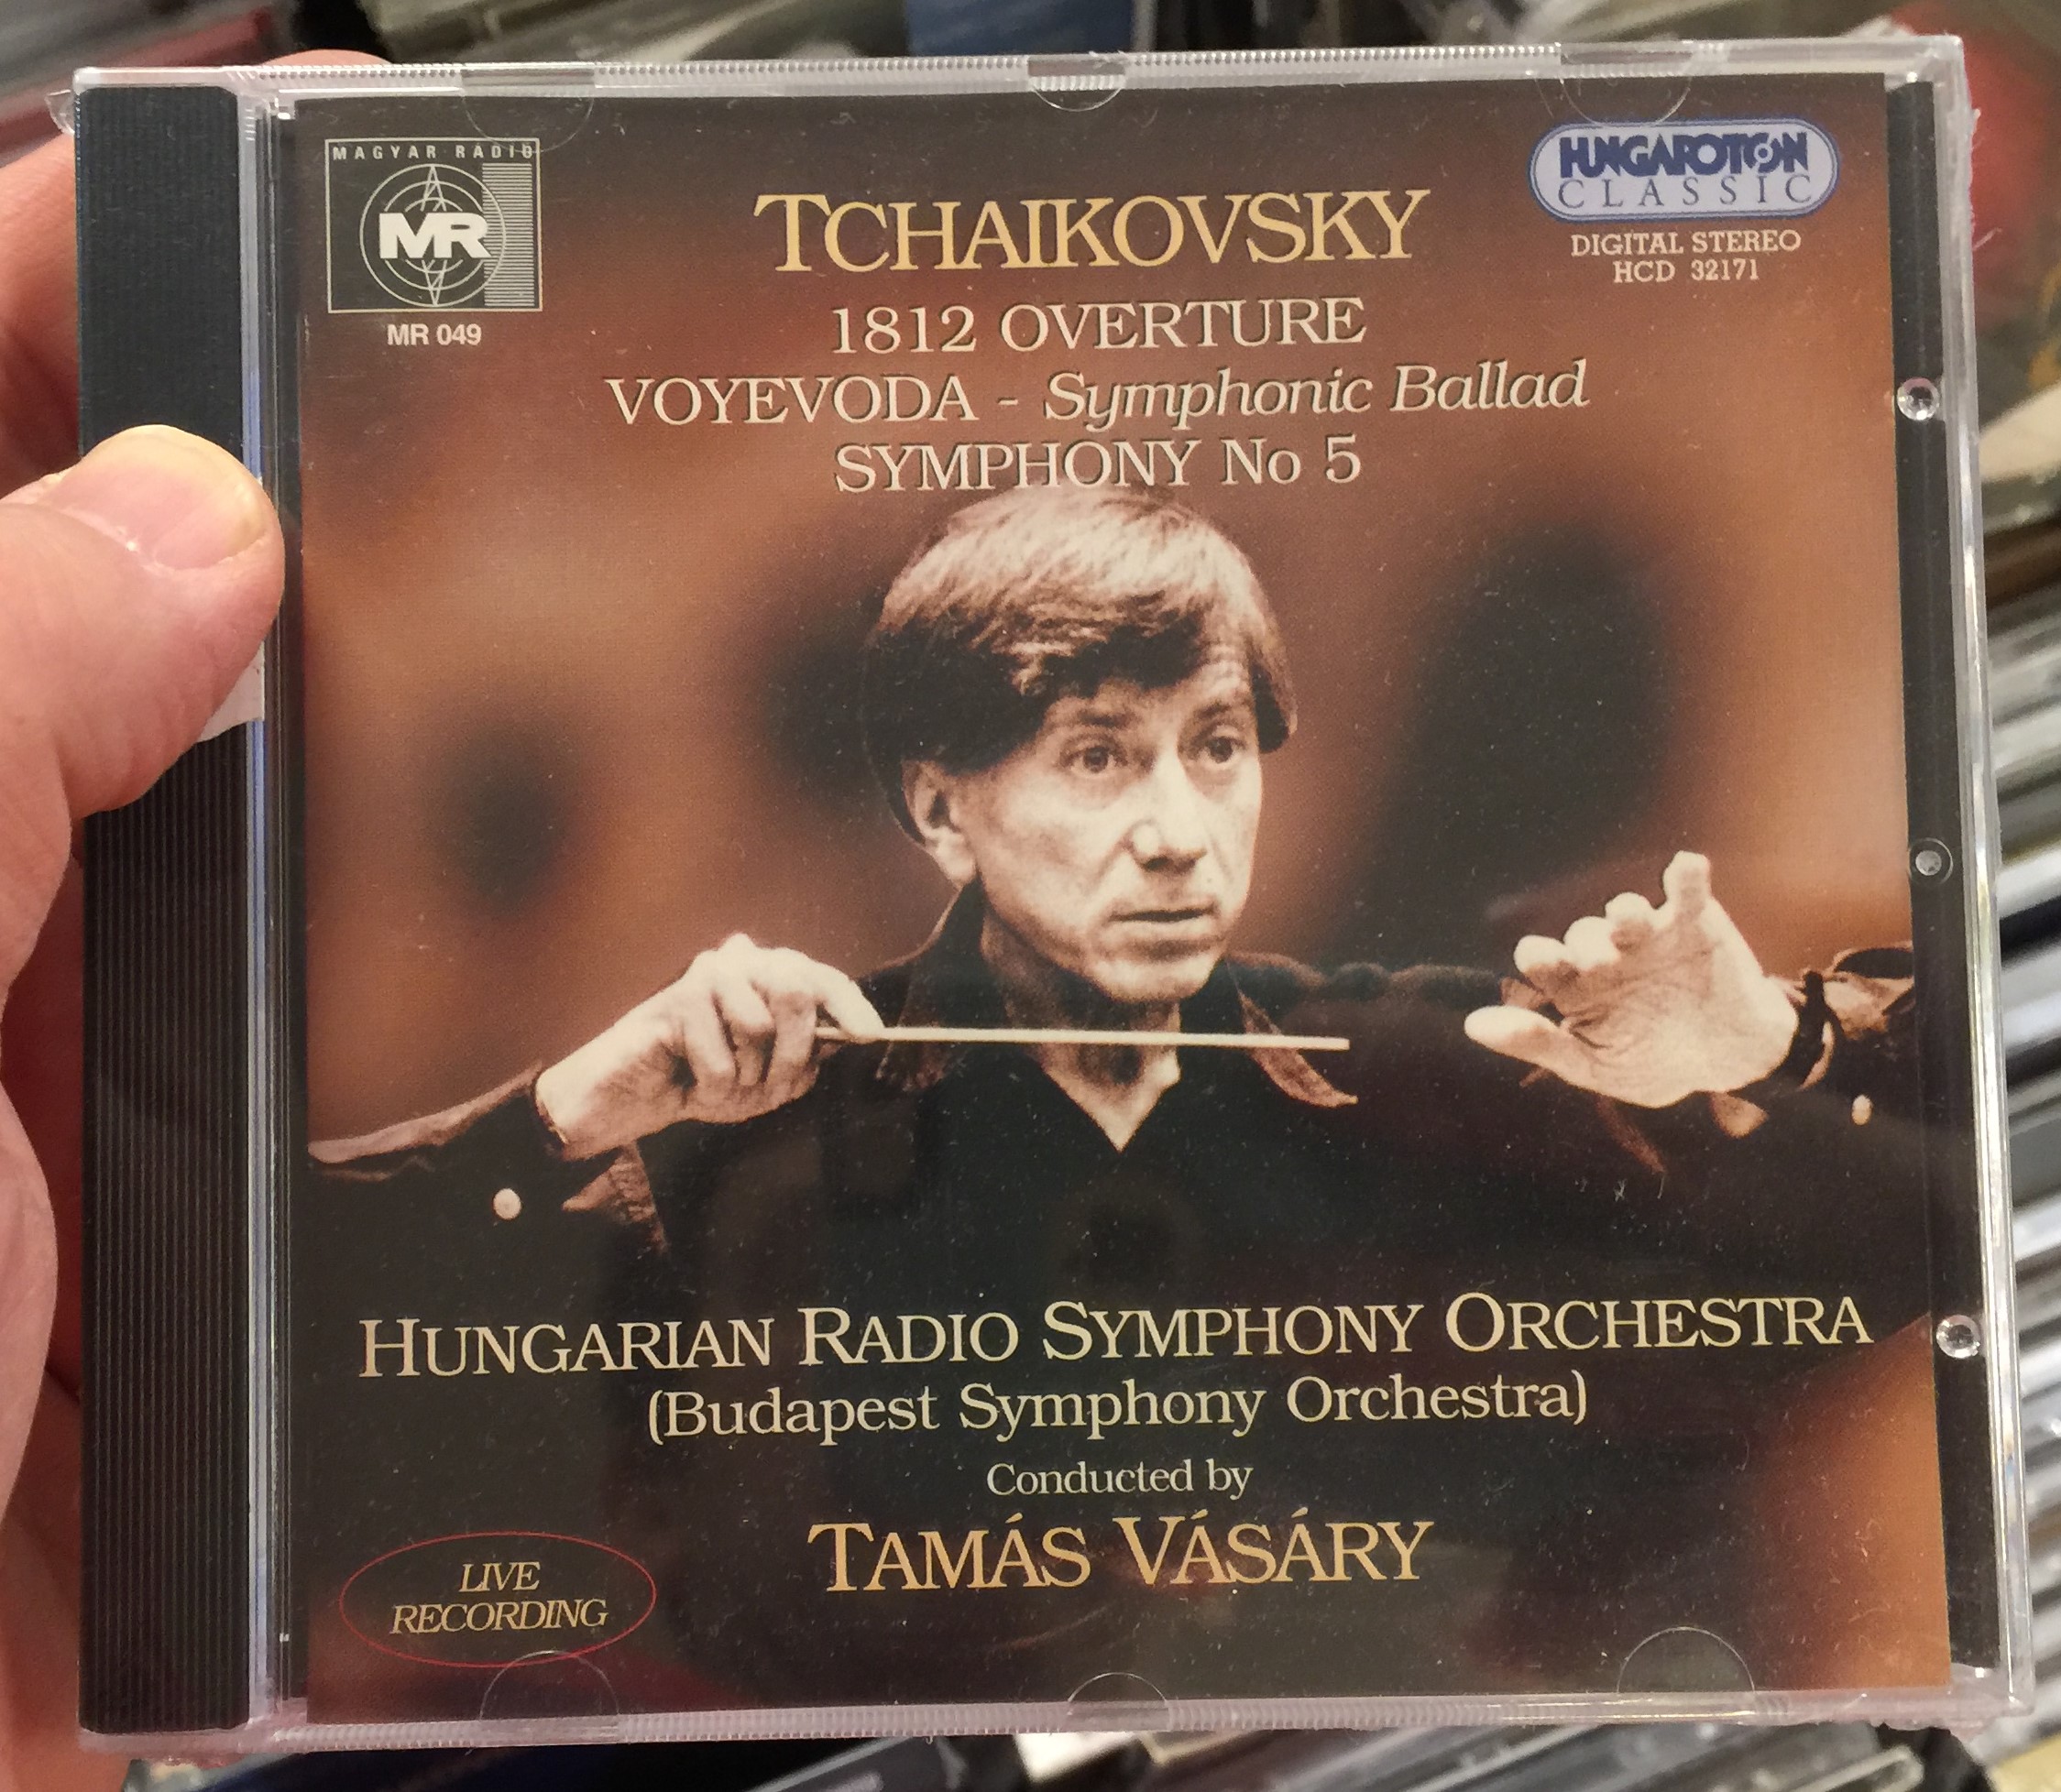 tchaikovsky-1812-ouverture-voyevoda-symphonic-ballad-symphony-no.-5-hungarian-radio-symphony-orchestra-budapest-symphony-orchestra-conducted-by-tamas-vasary-hungaroton-classic-audio-c-1-.jpg